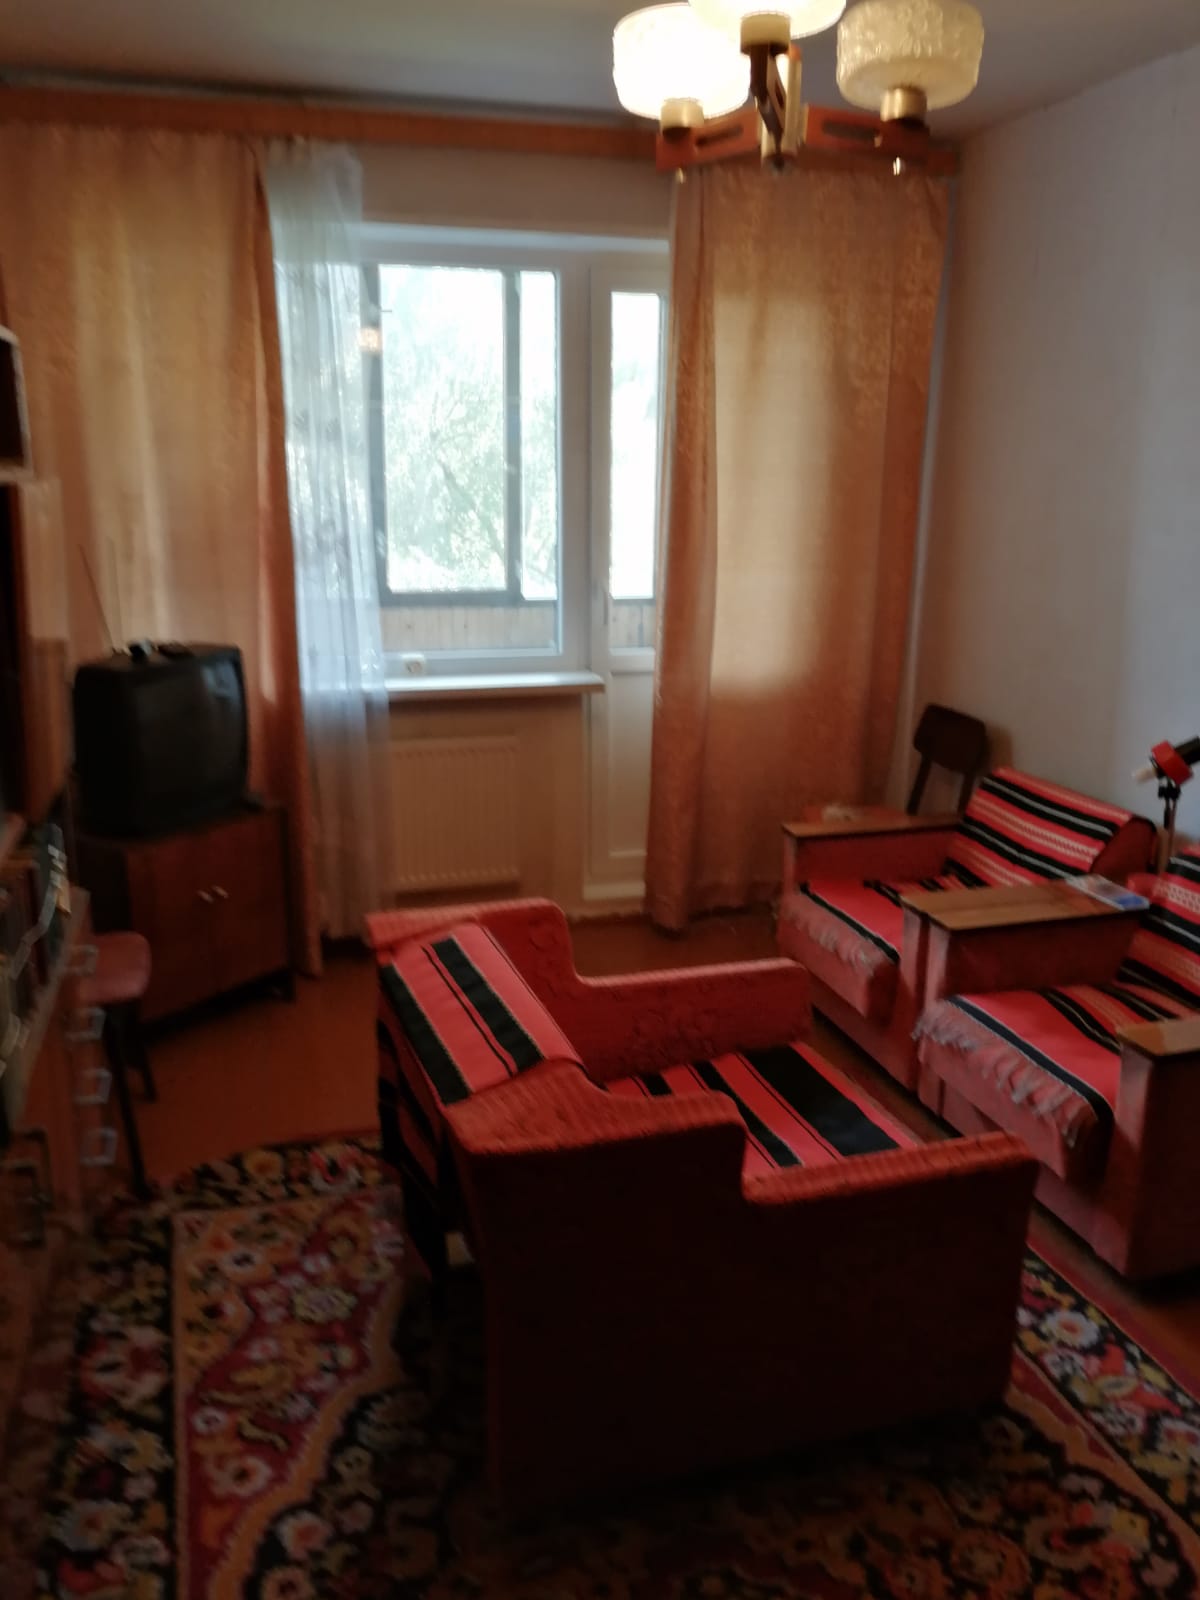 Продается 2-х комнатная квартира в центре Таллина, Эстония